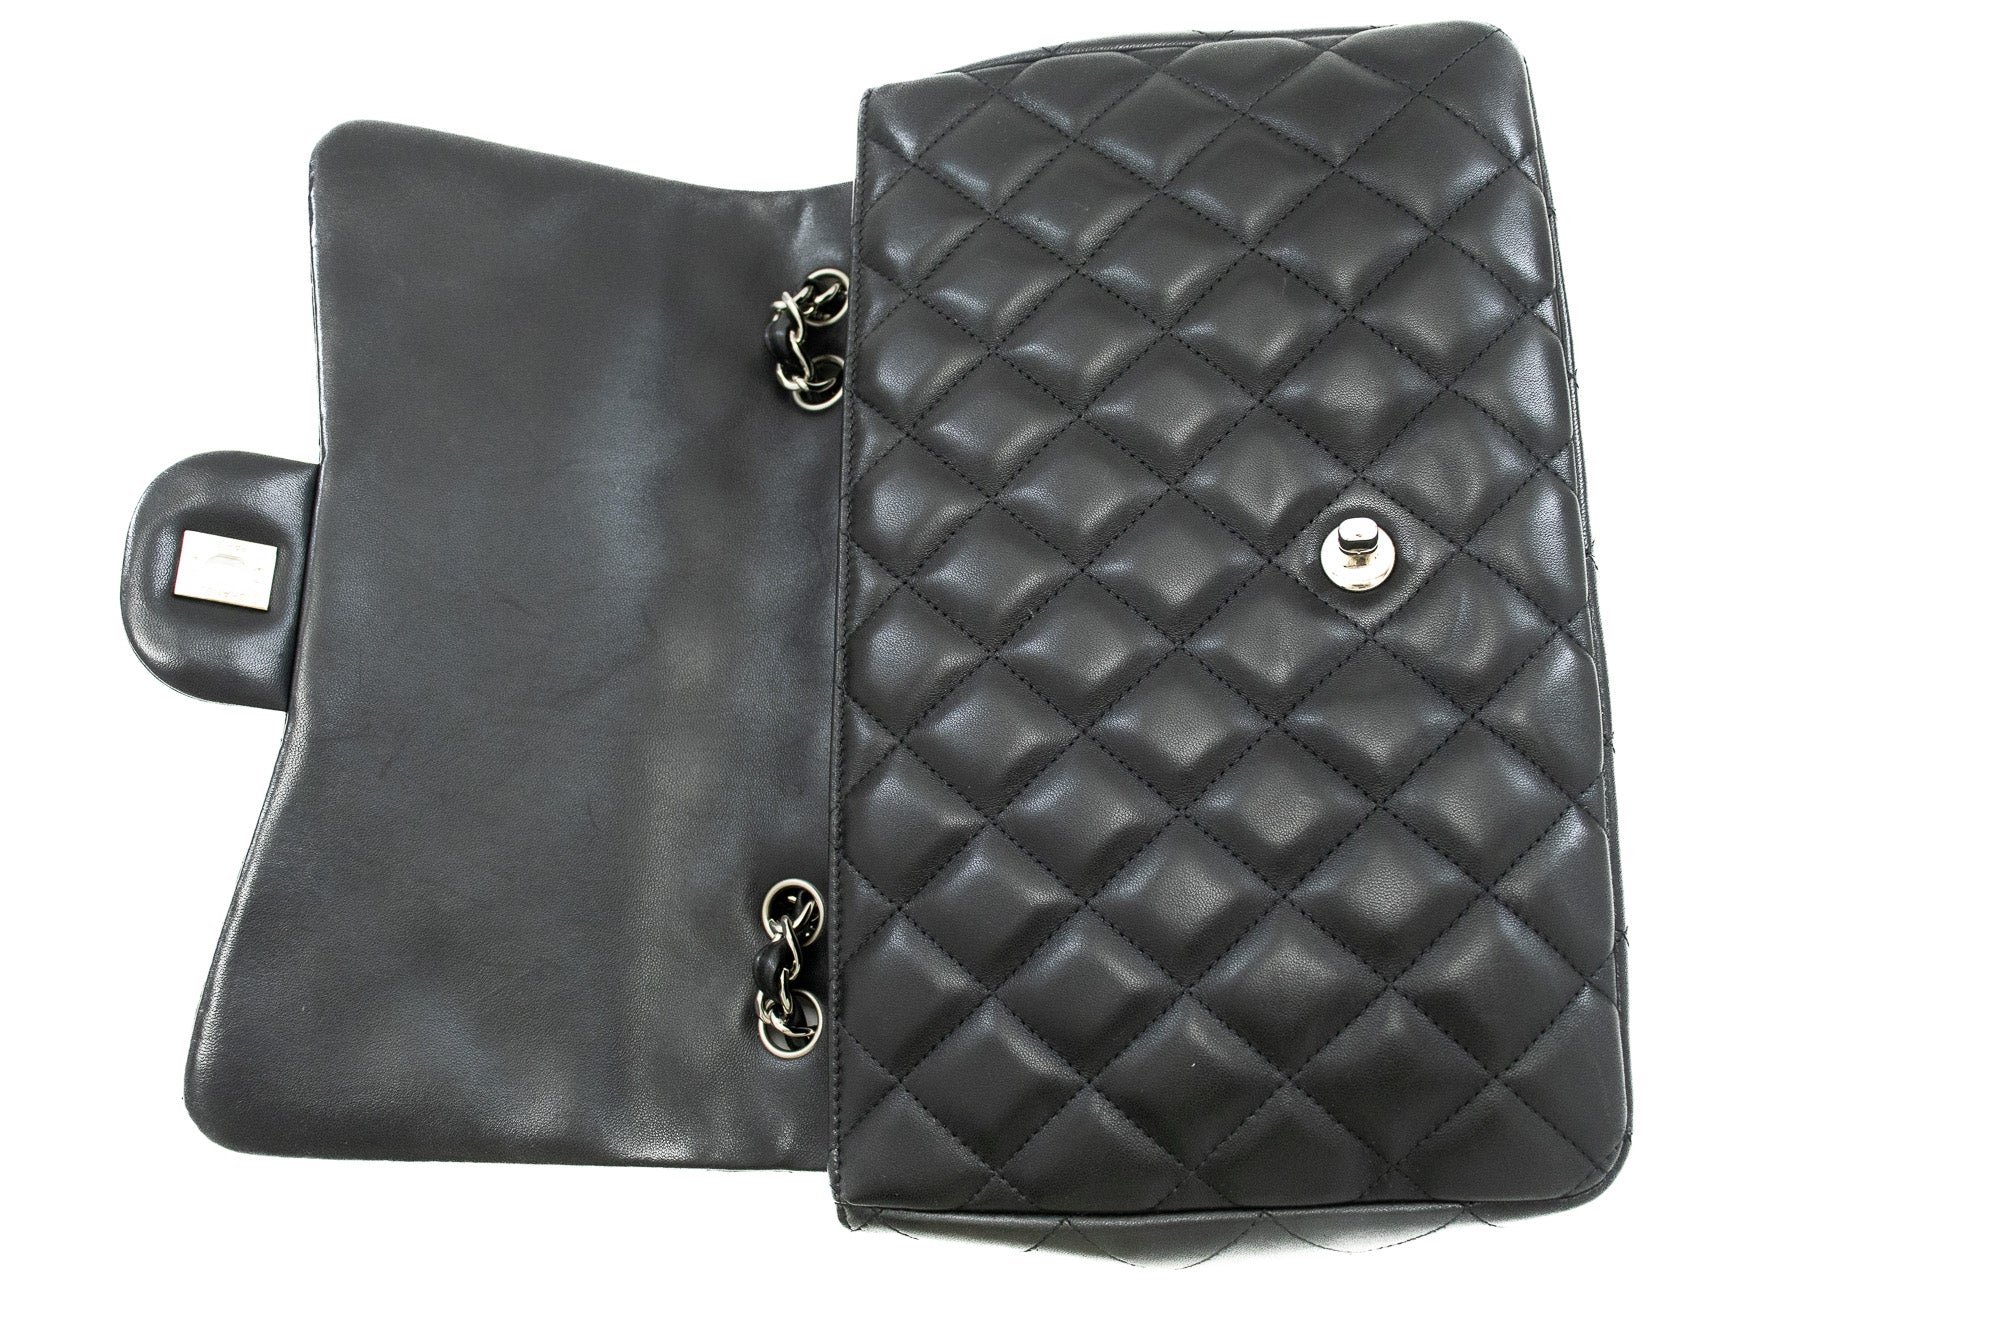 Chanel Classic Large 11 Chain Shoulder Bag Flap Black Lambskin J42